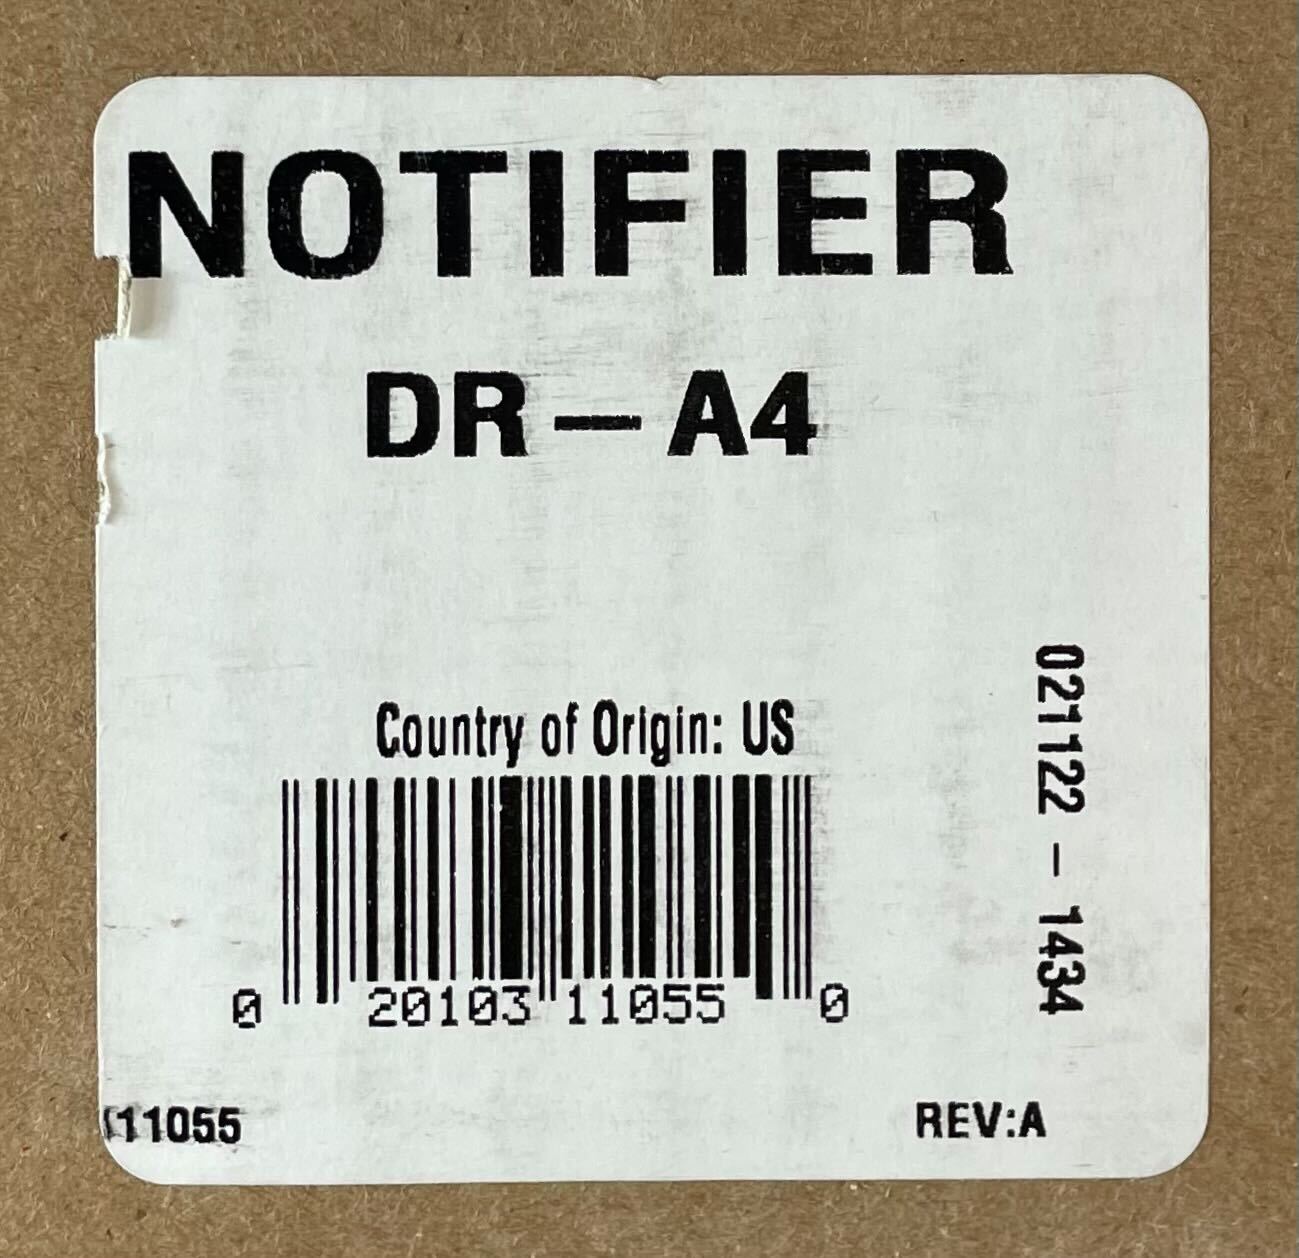 Notifier DR-A4 - The Fire Alarm Supplier